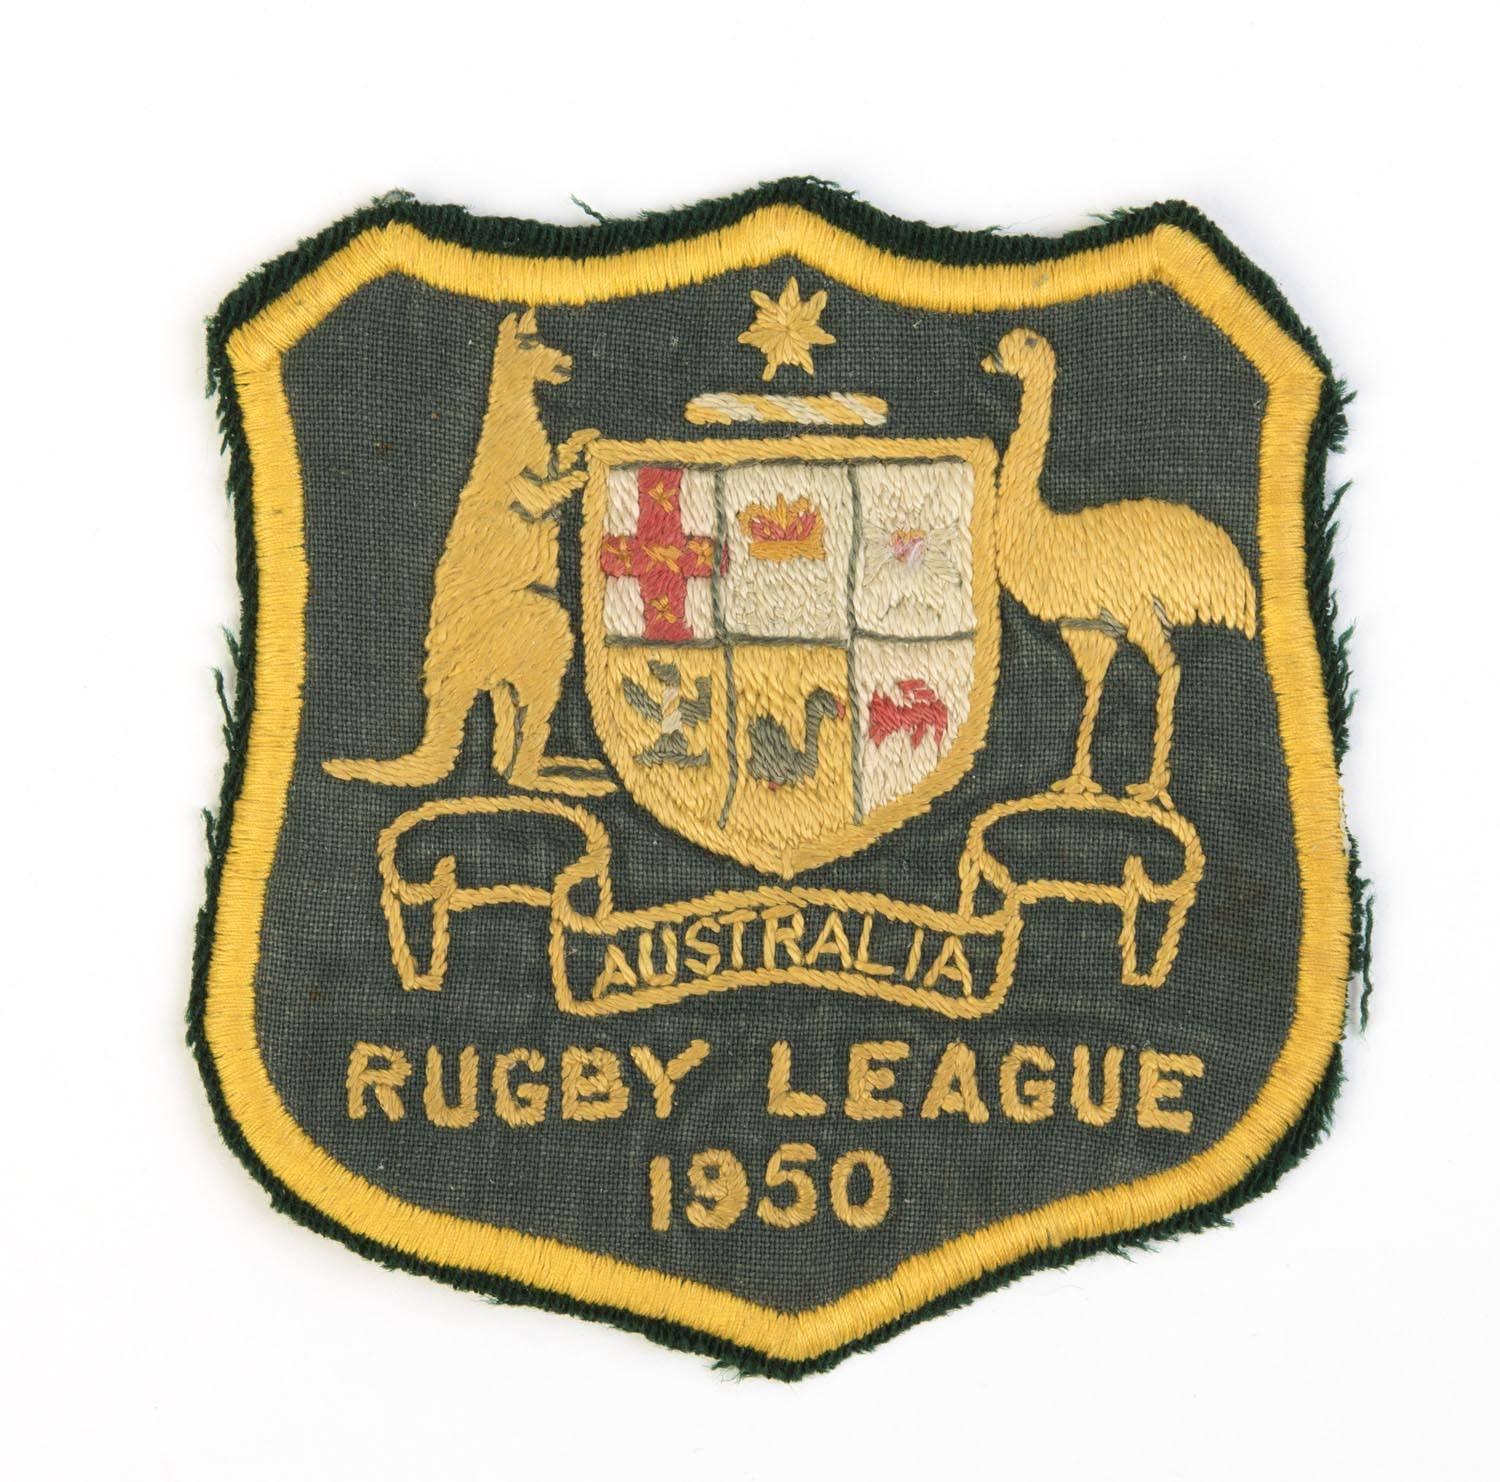 Australian Rugby League Logo - CLIVE CHURCHILL'S AUSTRALIAN RUGBY LEAGUE BADGE, with Australian